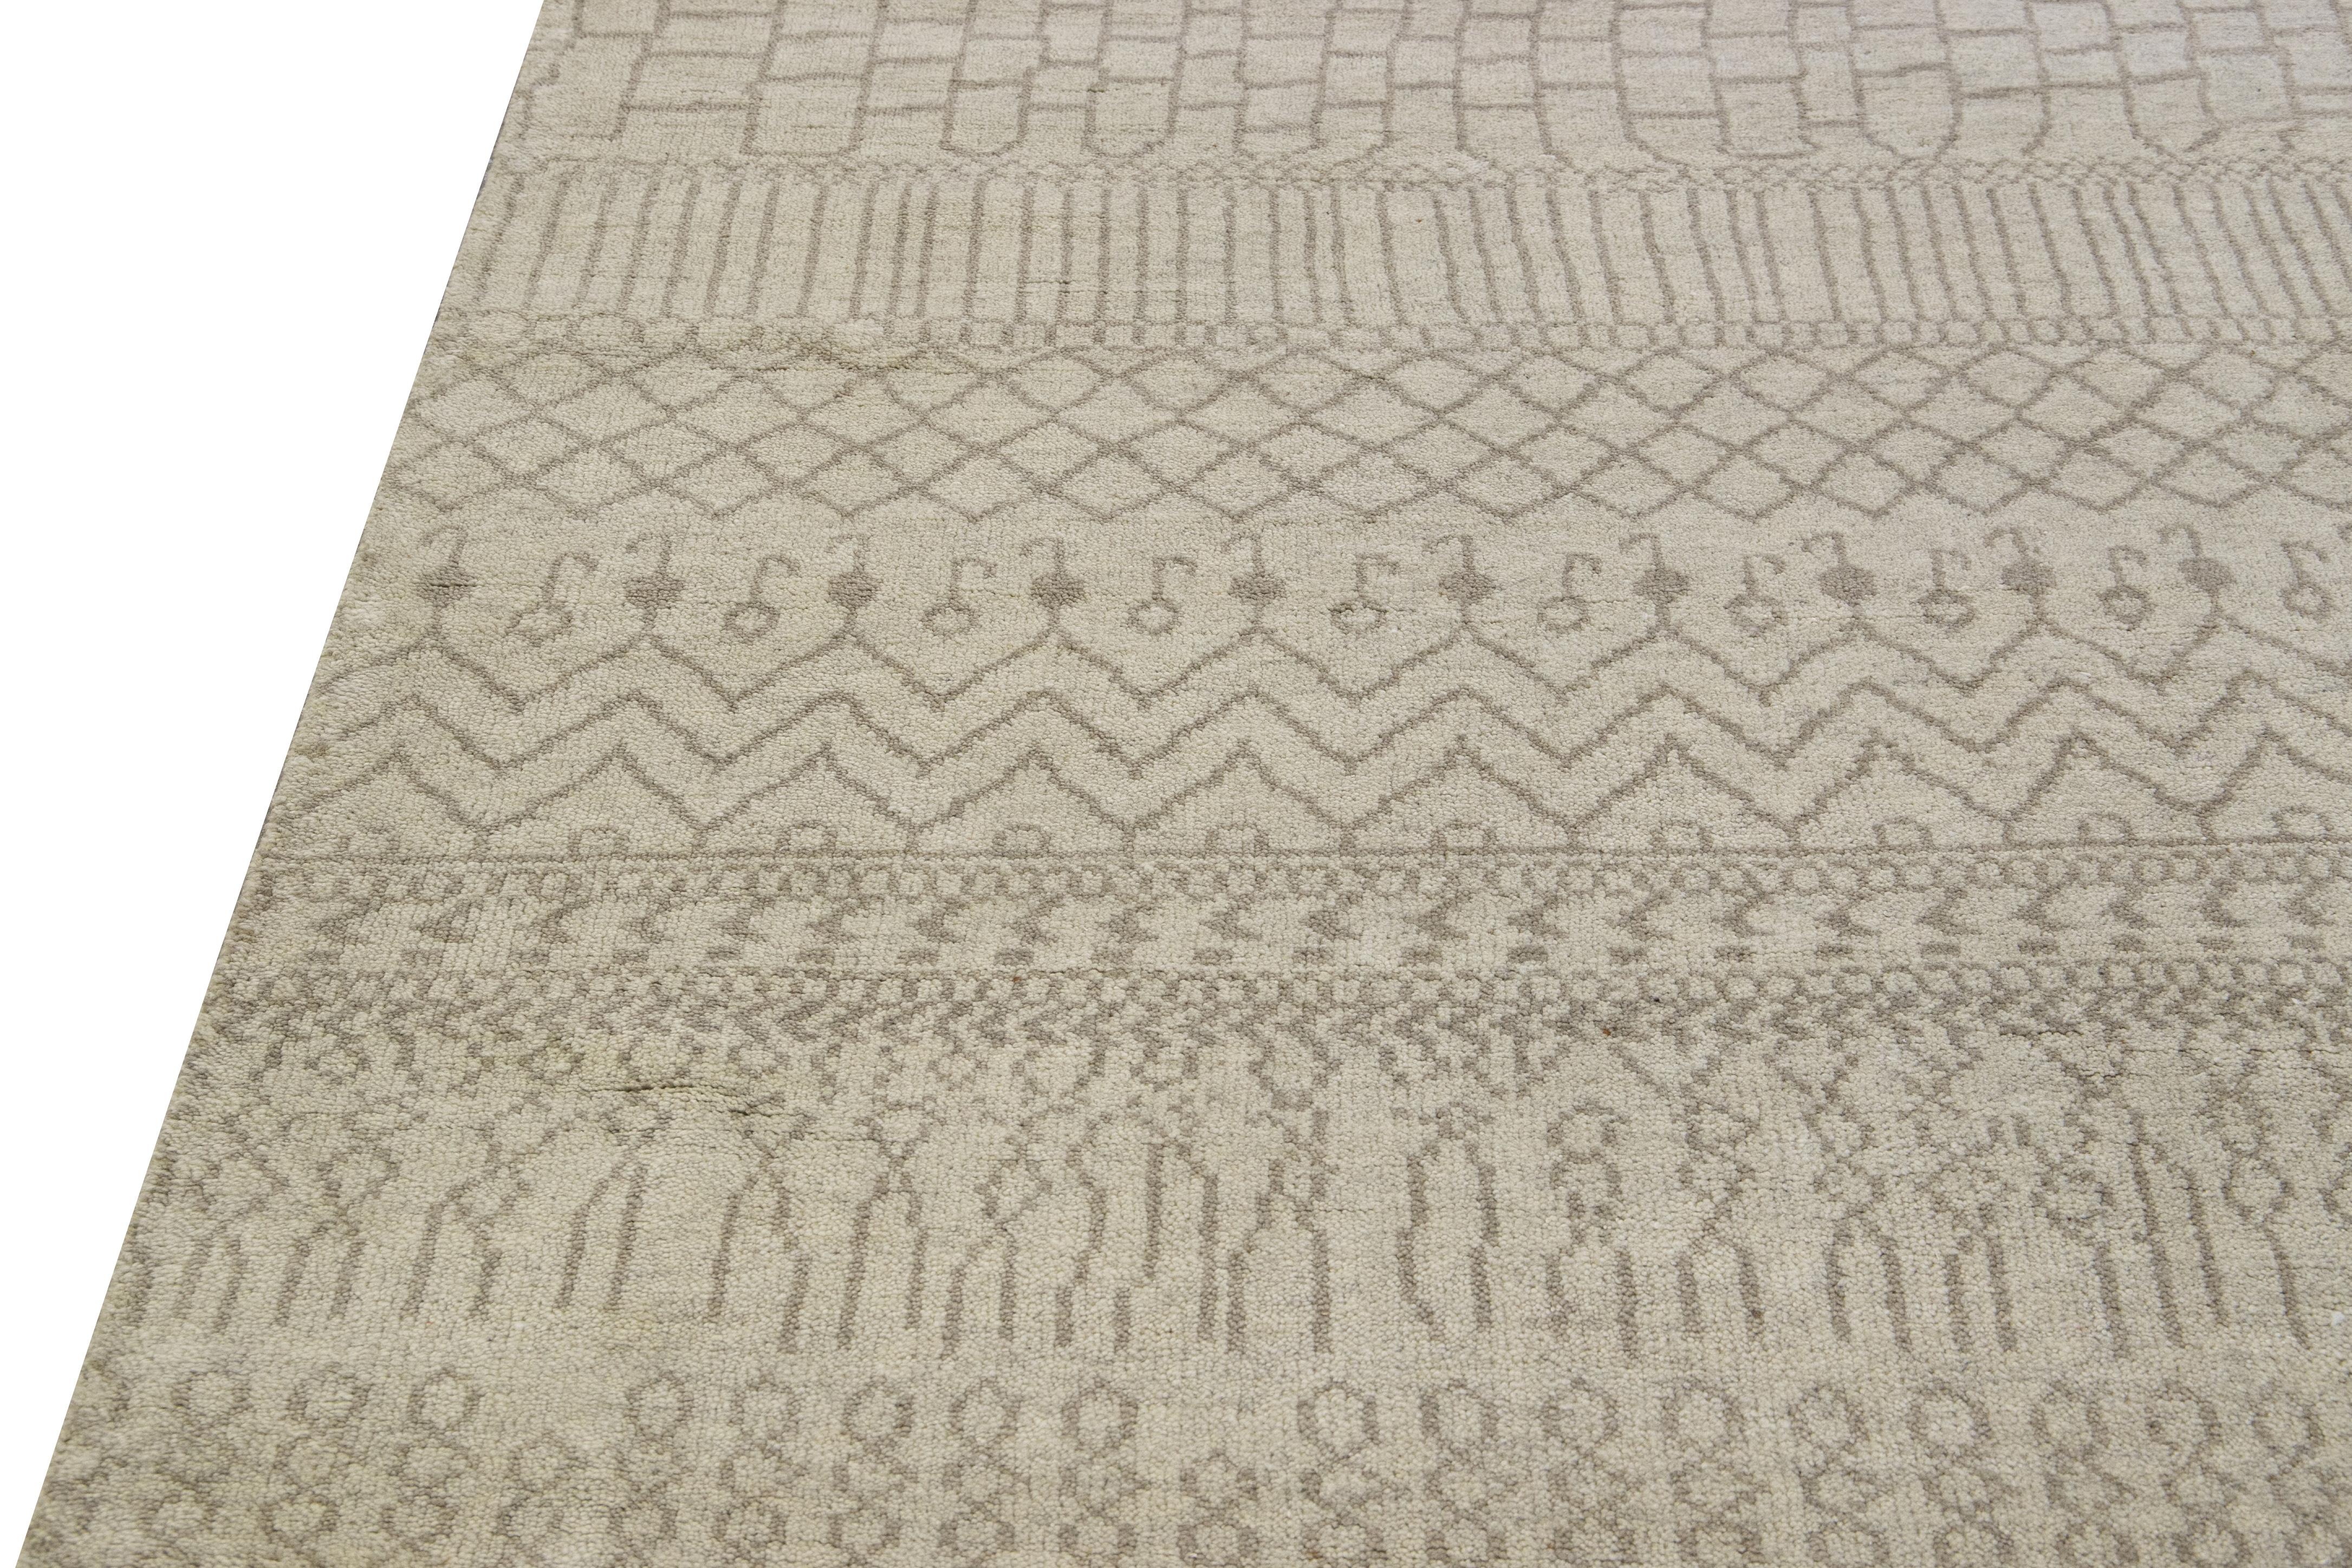 Indian Modern Moroccan Style Handmade Designed Beige Wool Rug For Sale